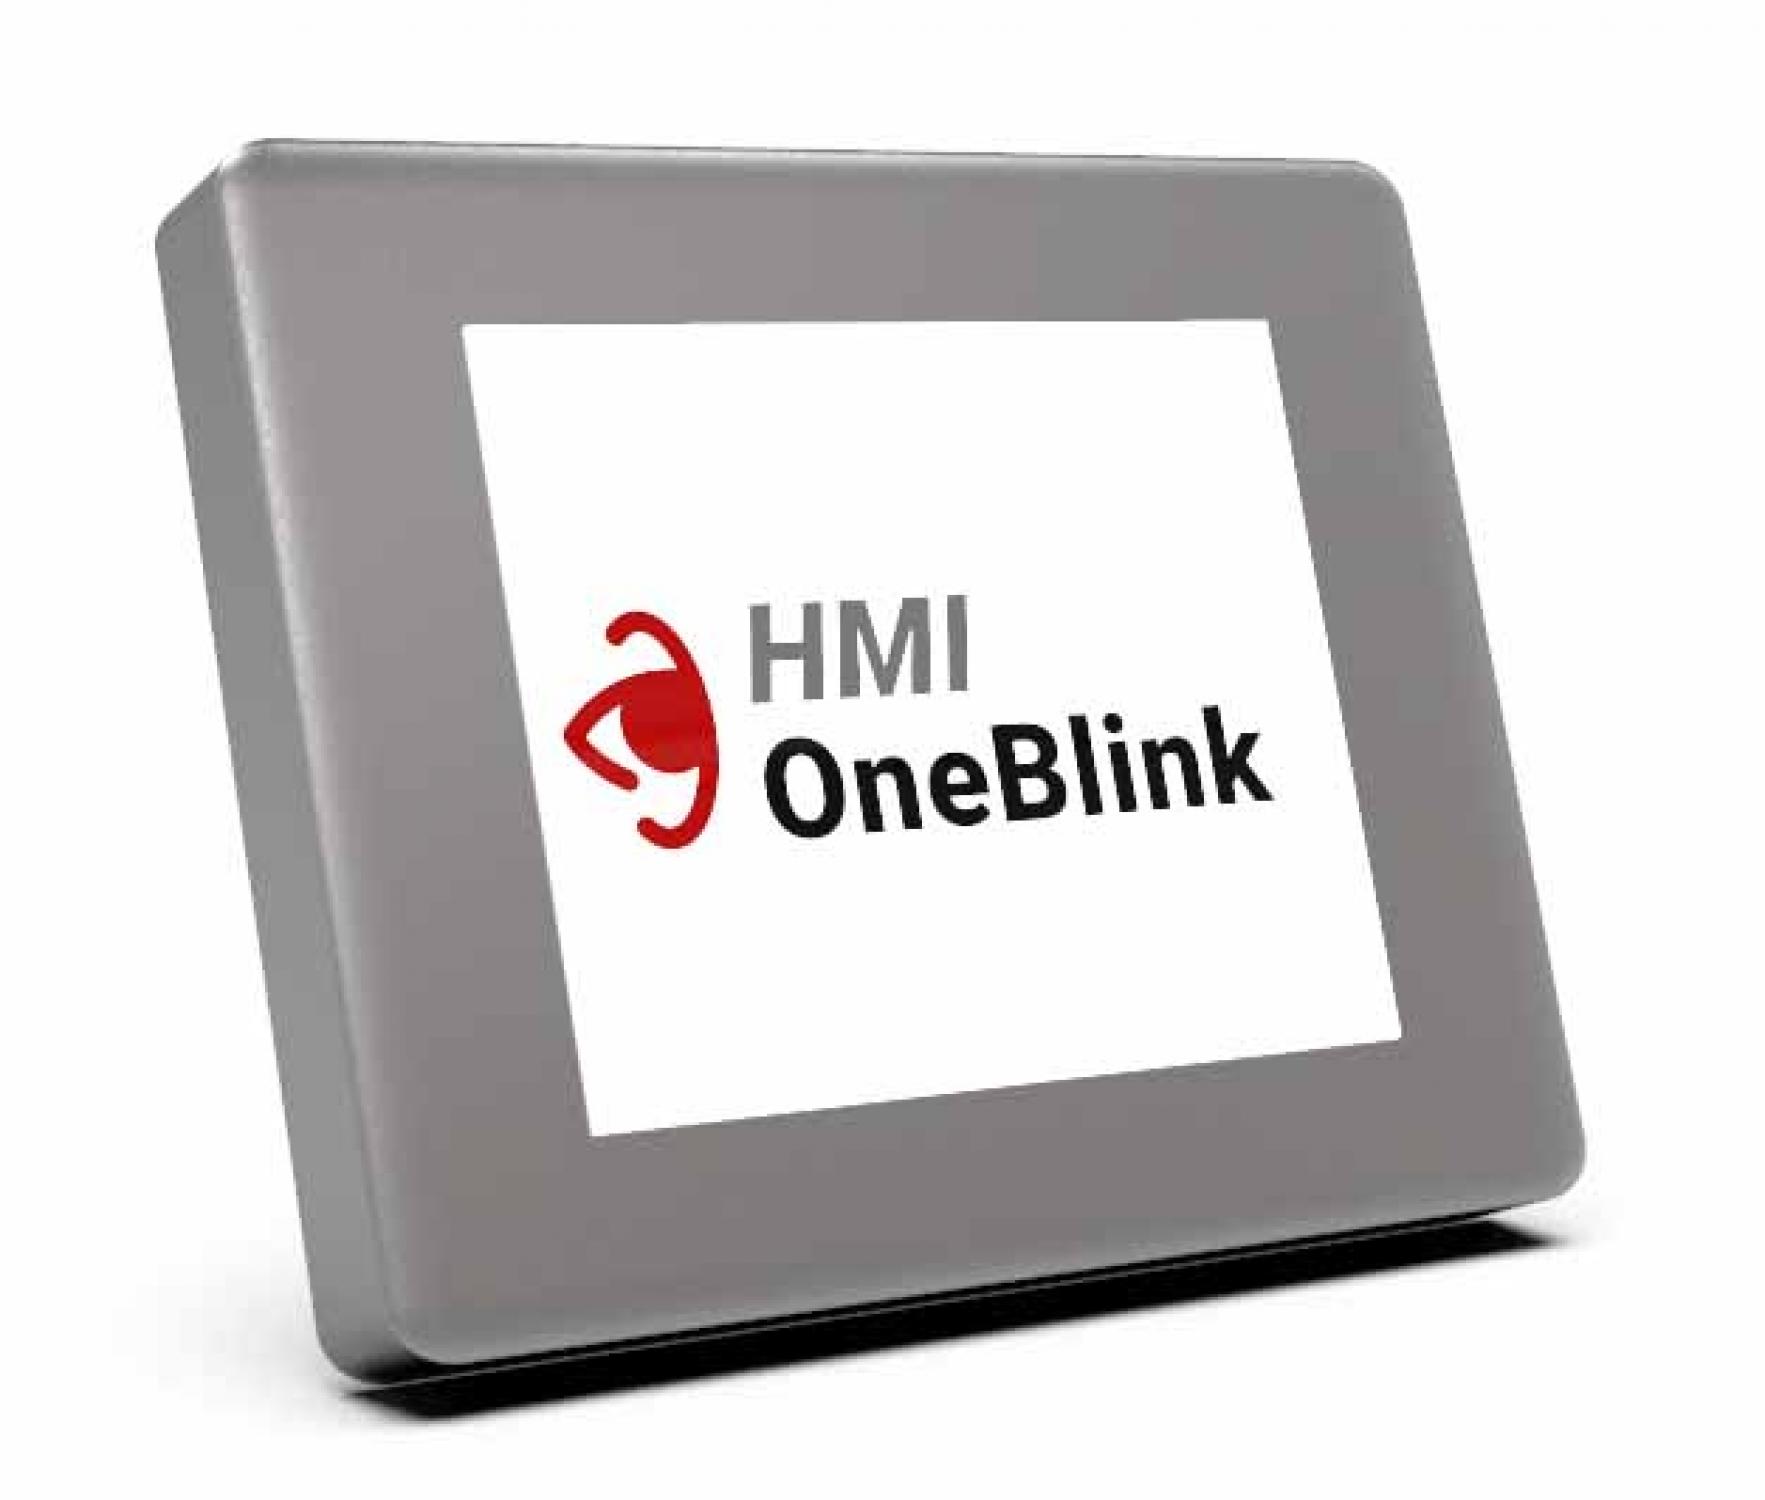 HMI OneBLink logo